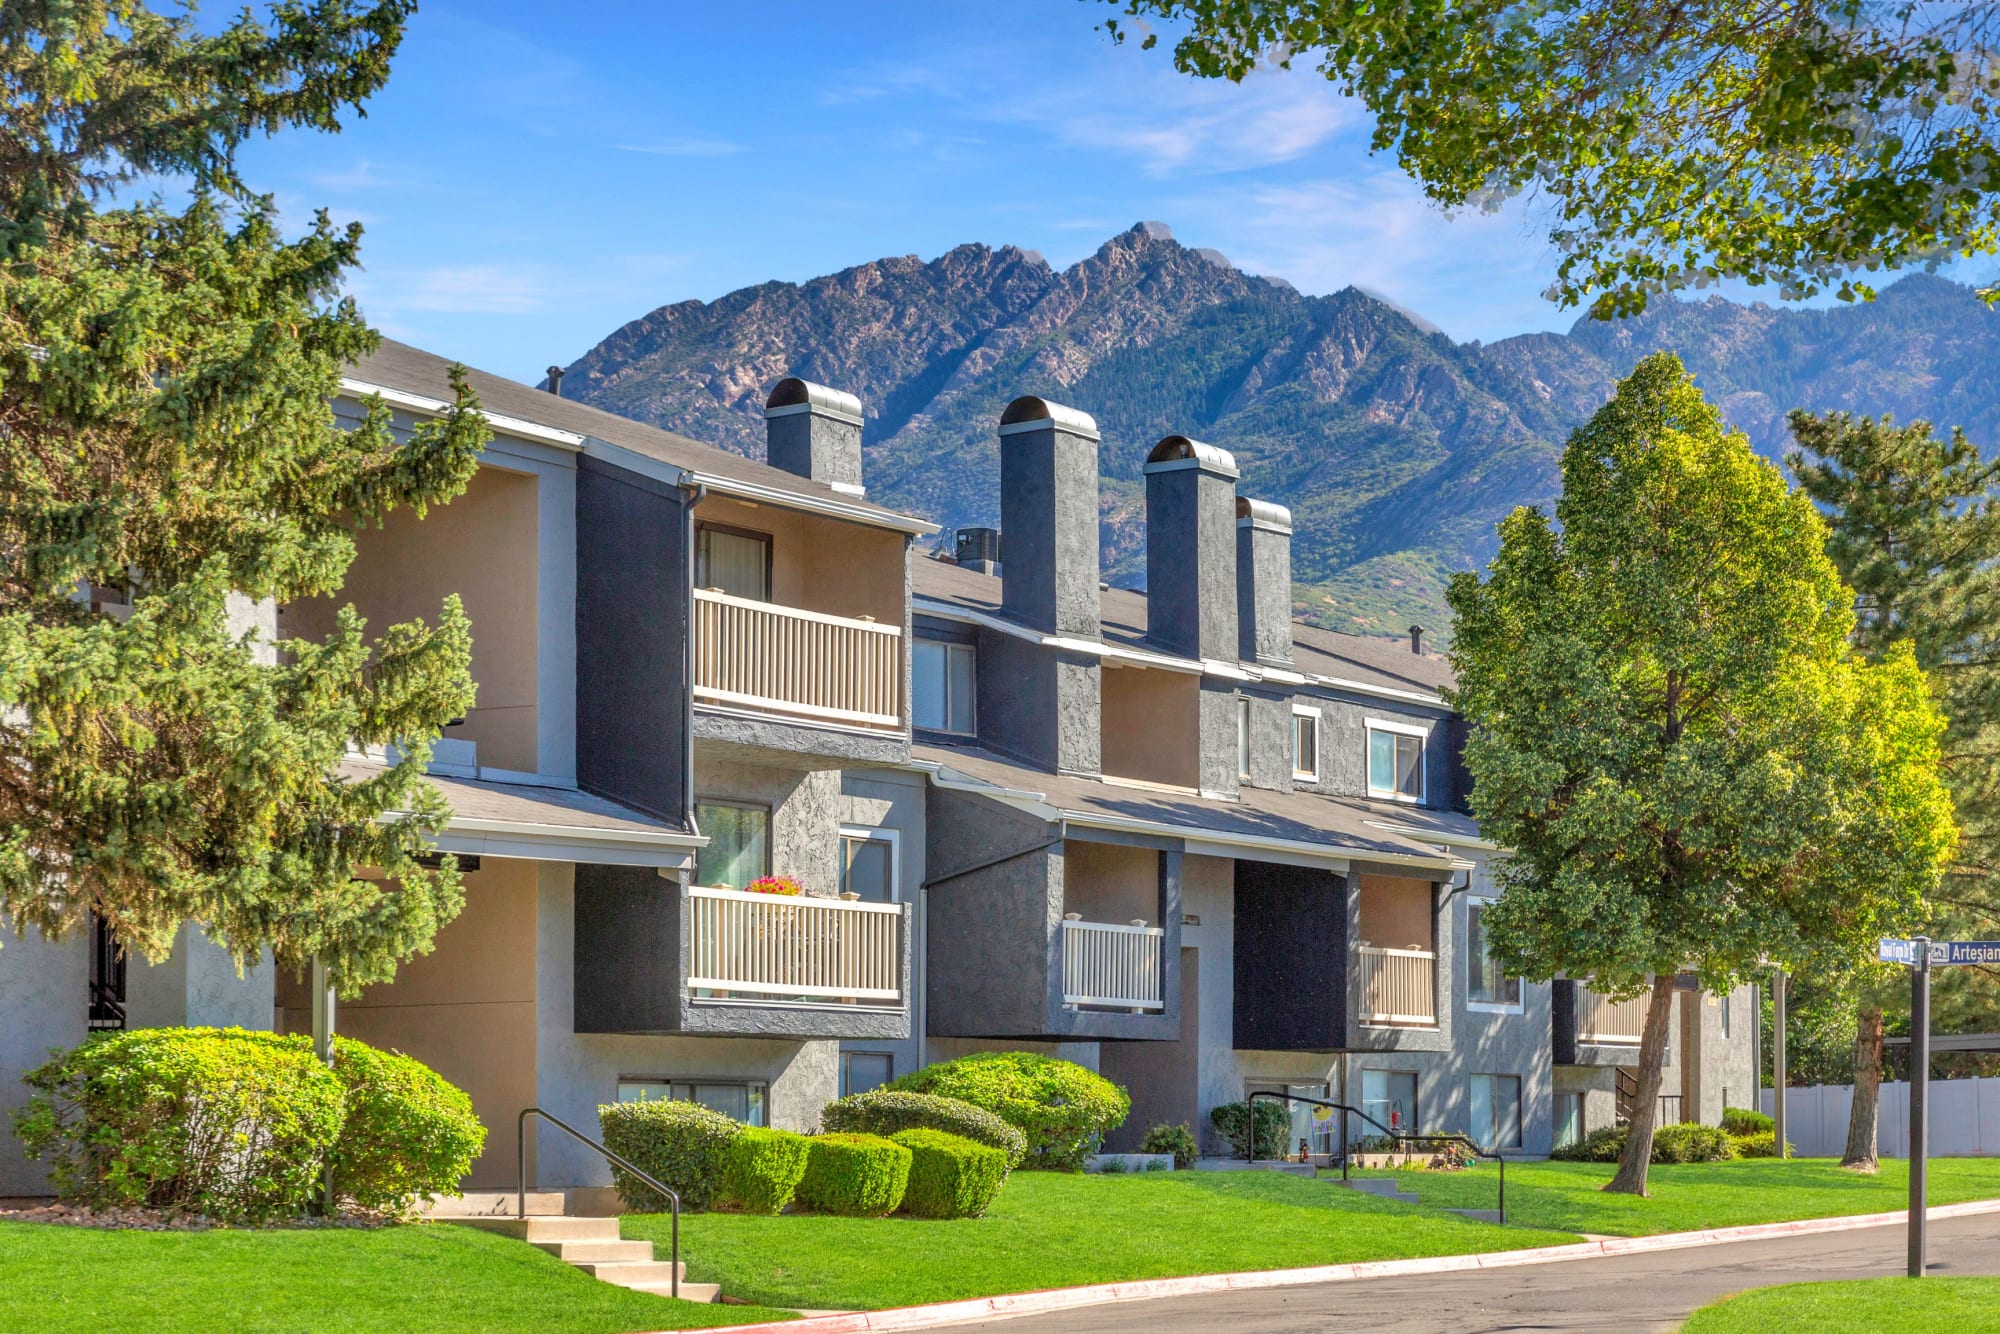 Exterior Building View of New Paint at Royal Farms Apartments in Salt Lake City, Utah